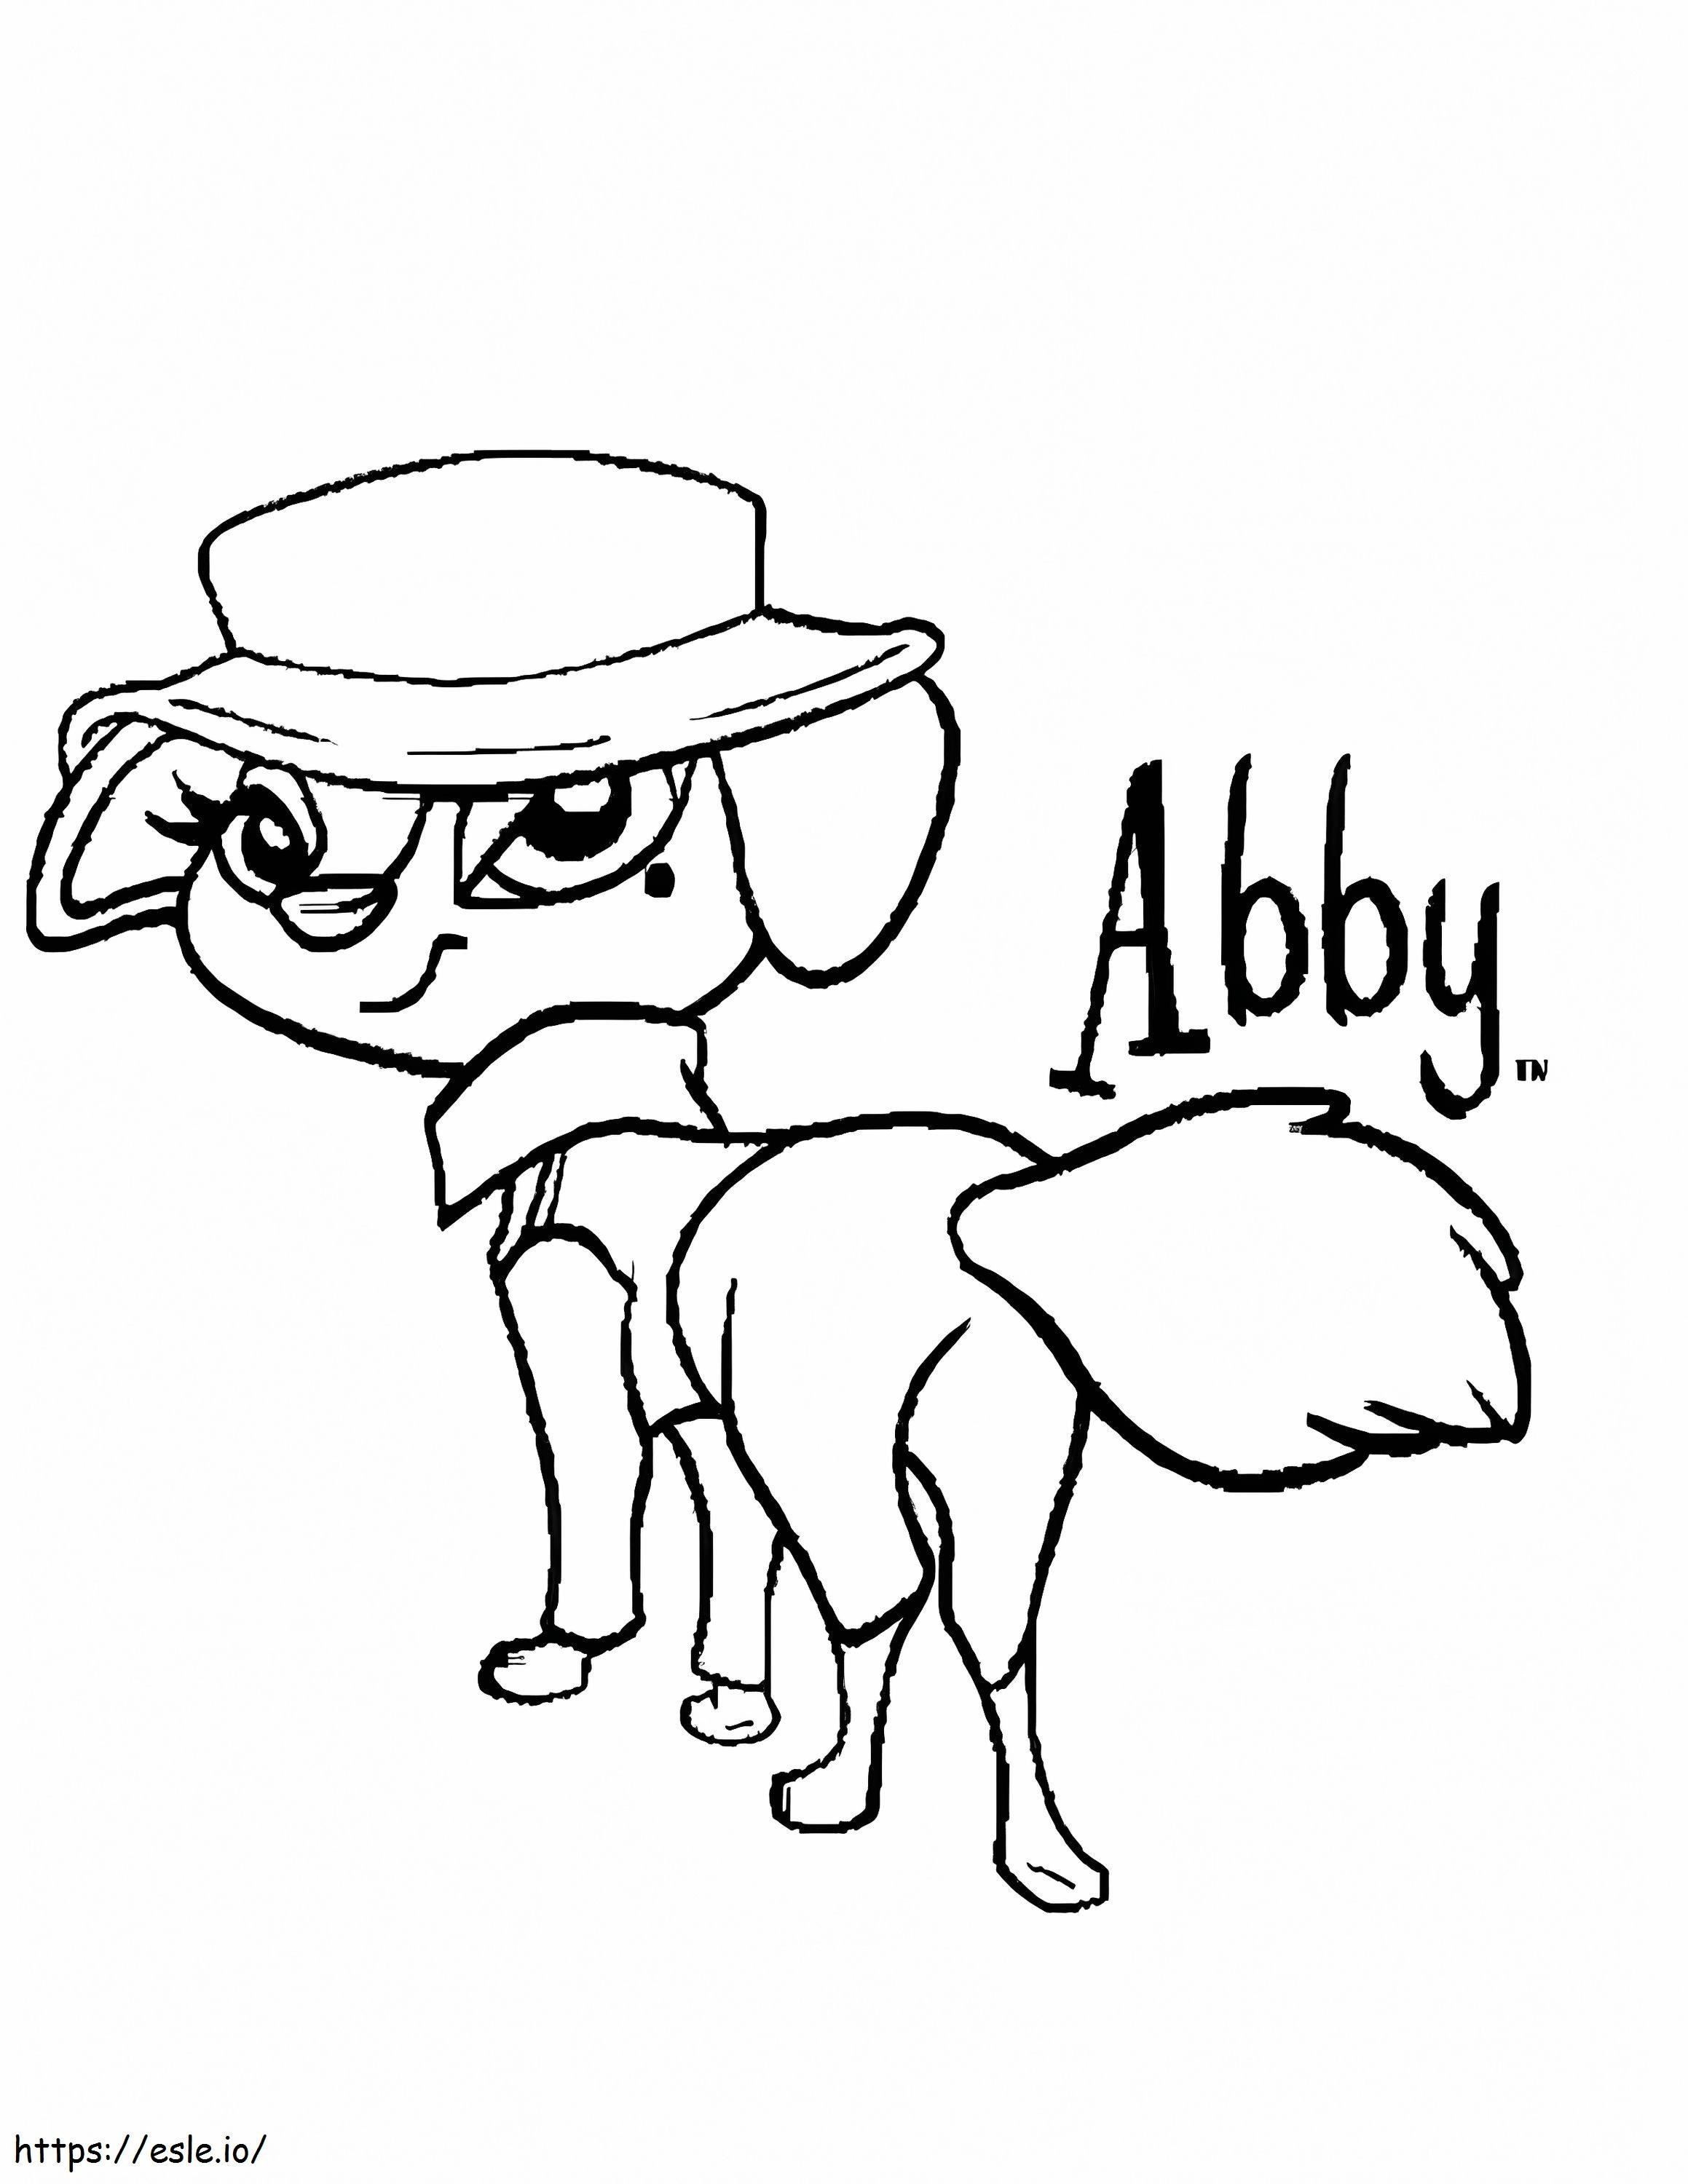 Abby din Bratz Petz de colorat